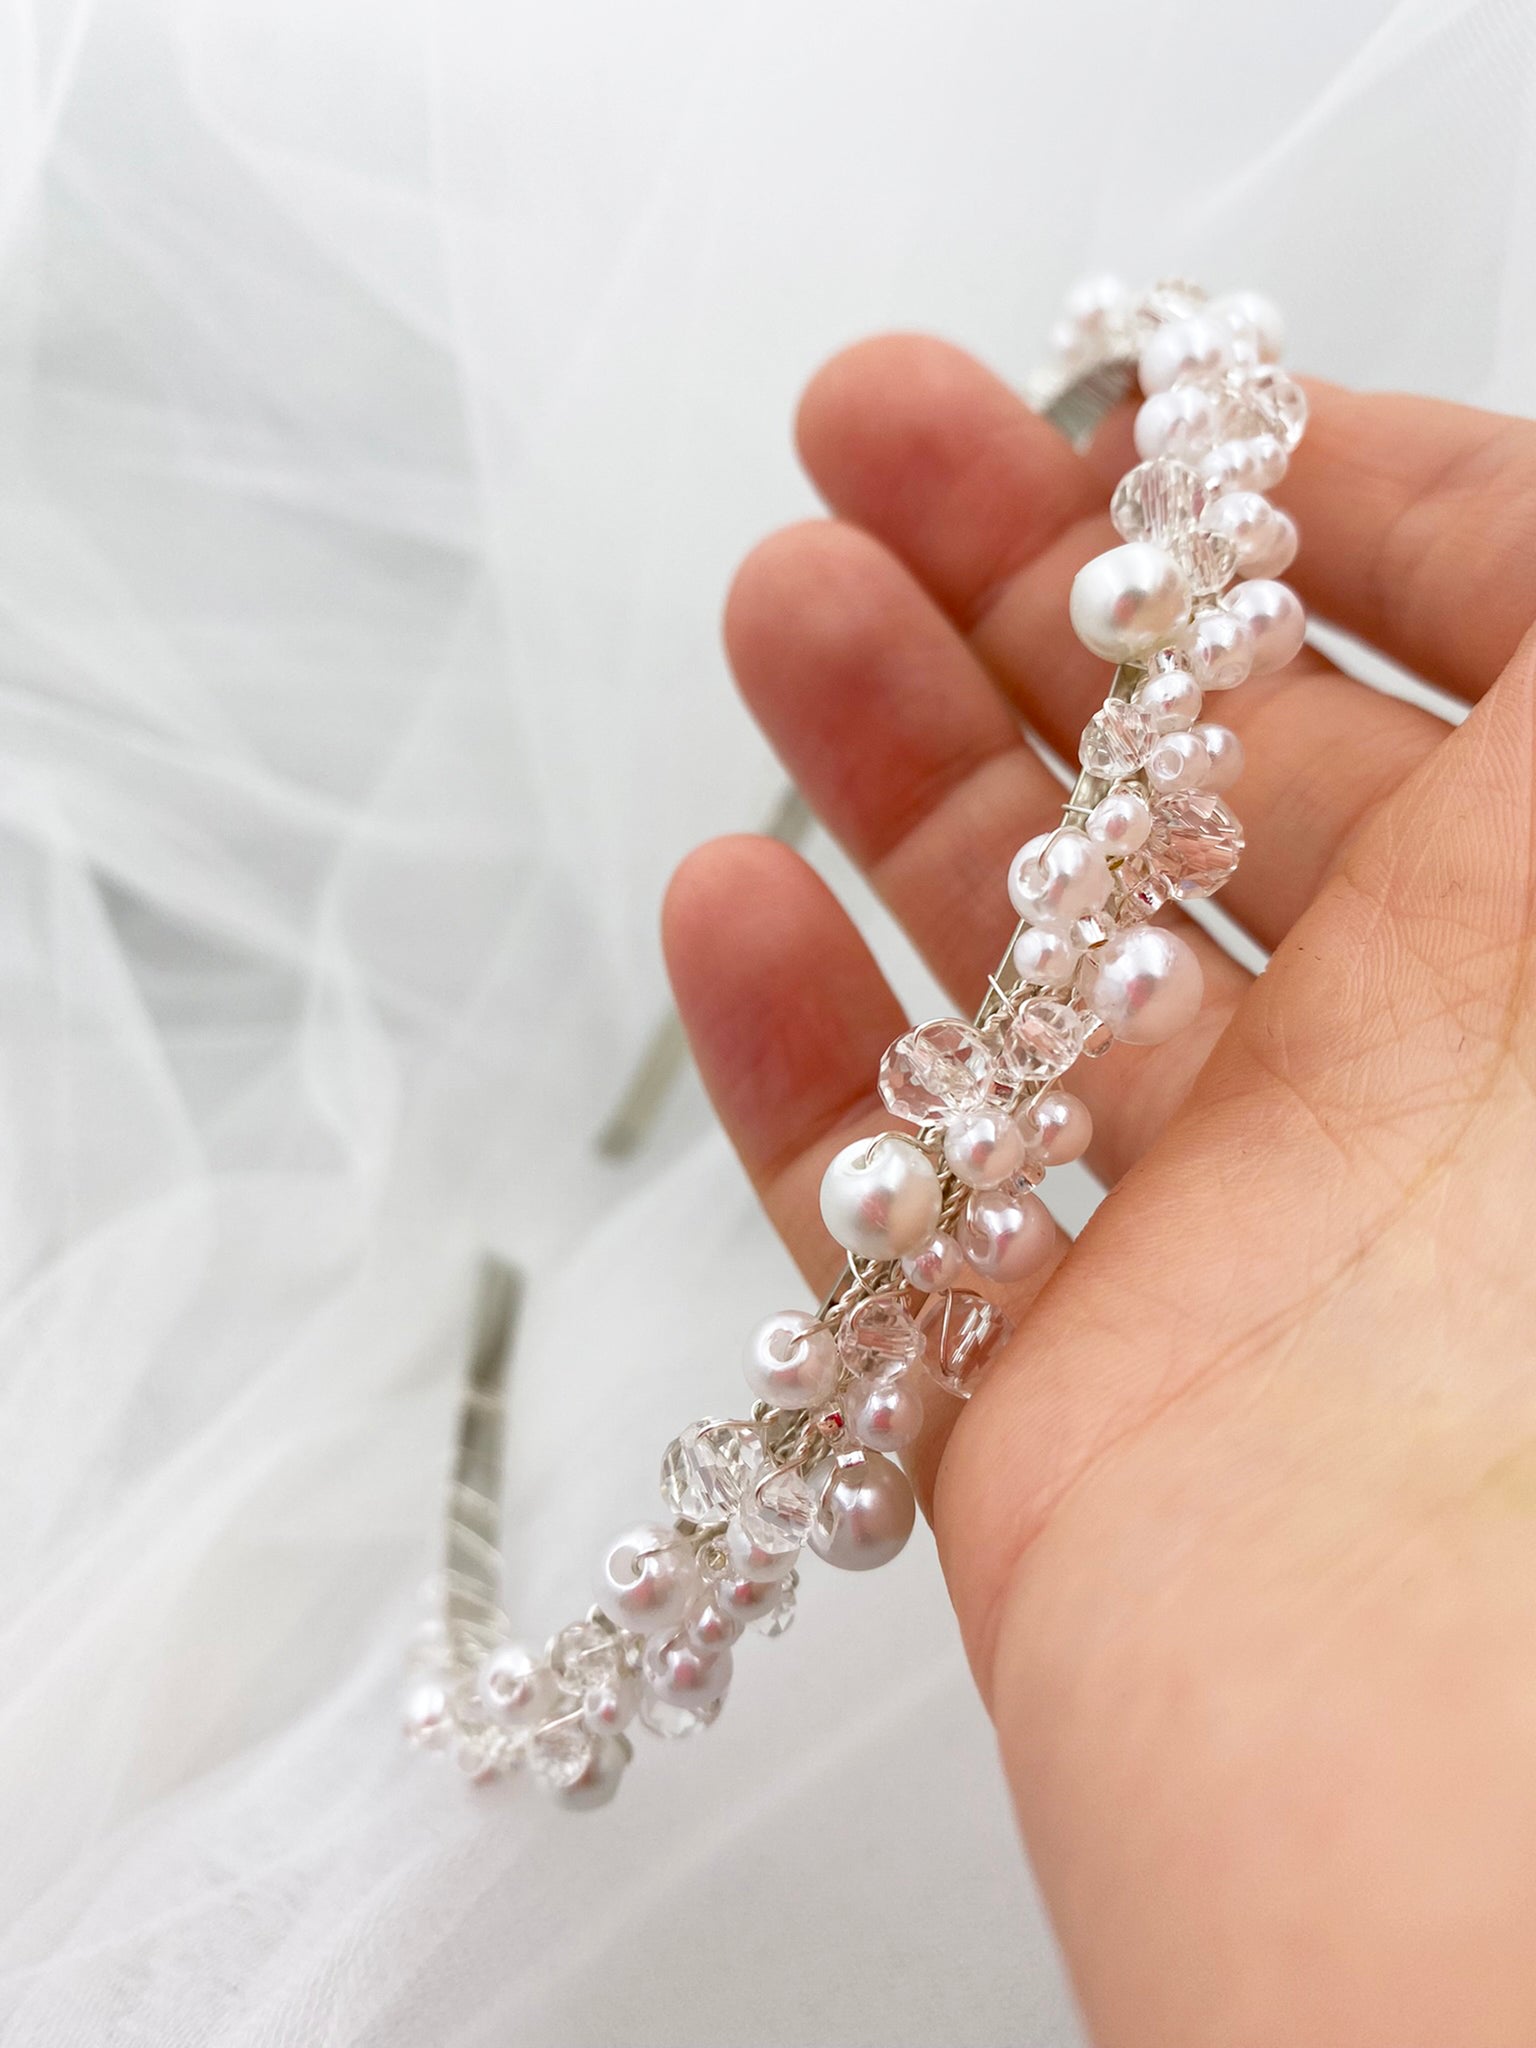 Pearl crystal bridal headband